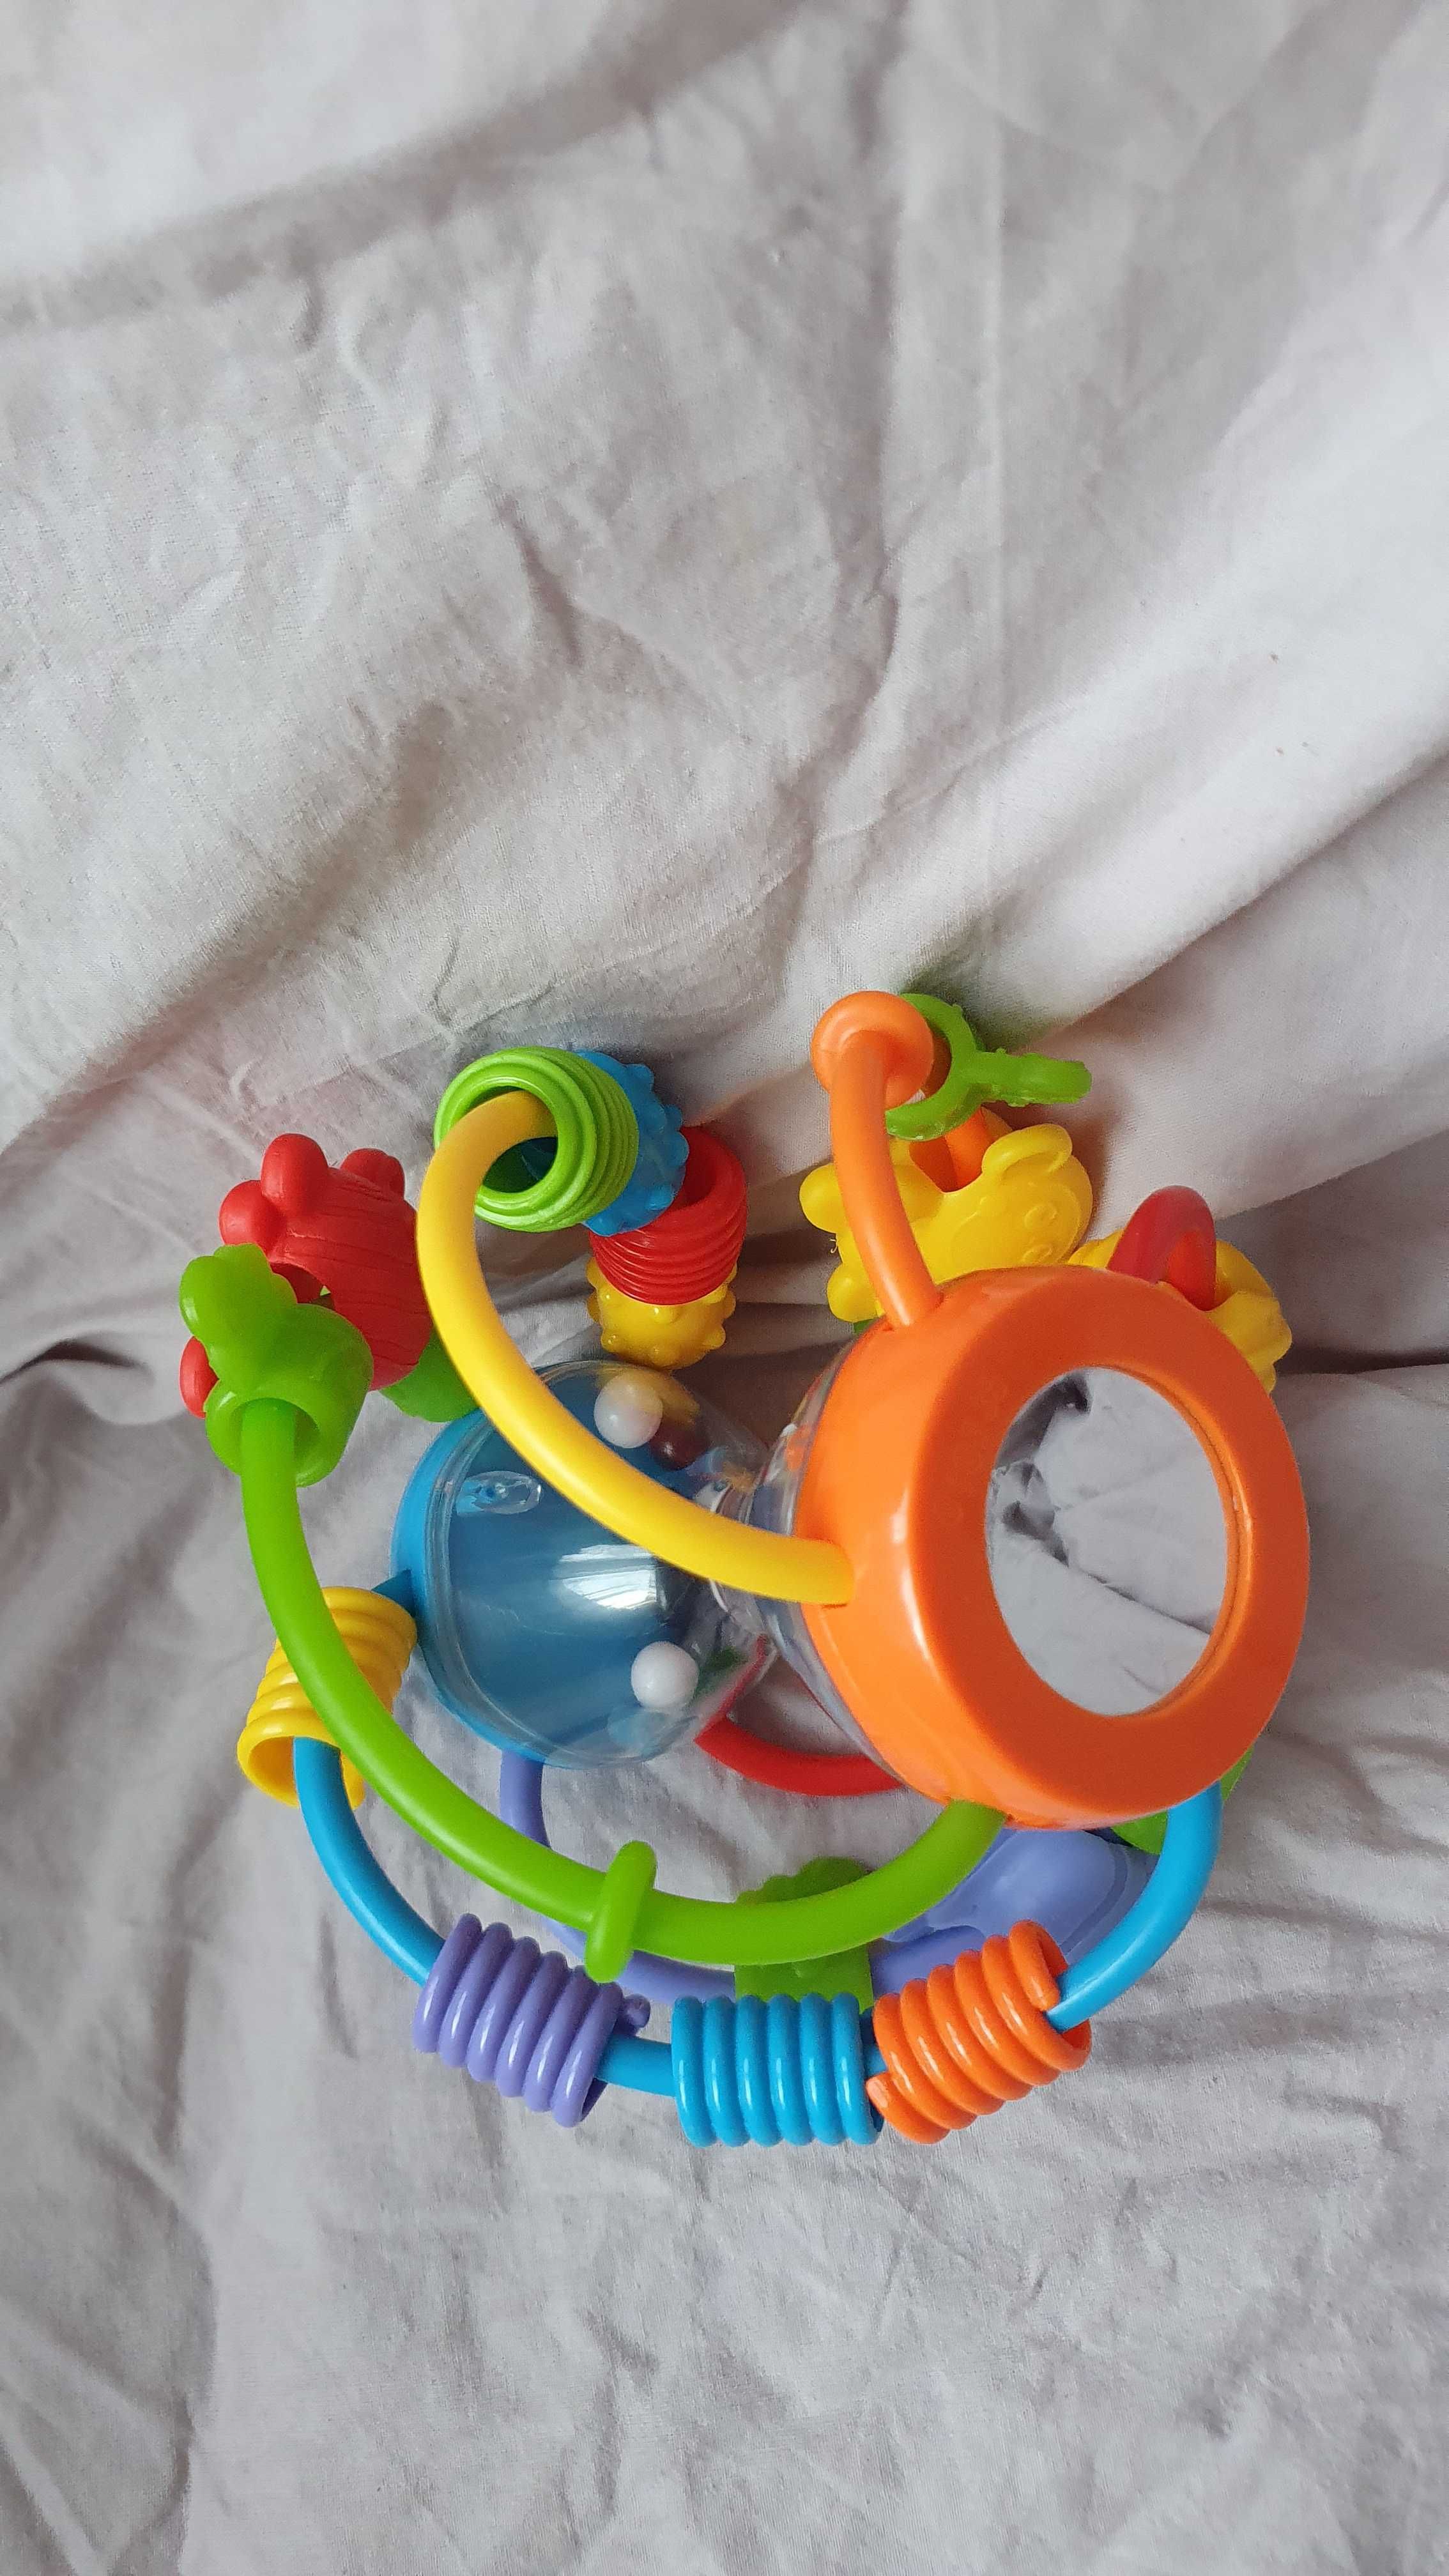 Бебешка играчка Playgro - топка Играй и опознавай